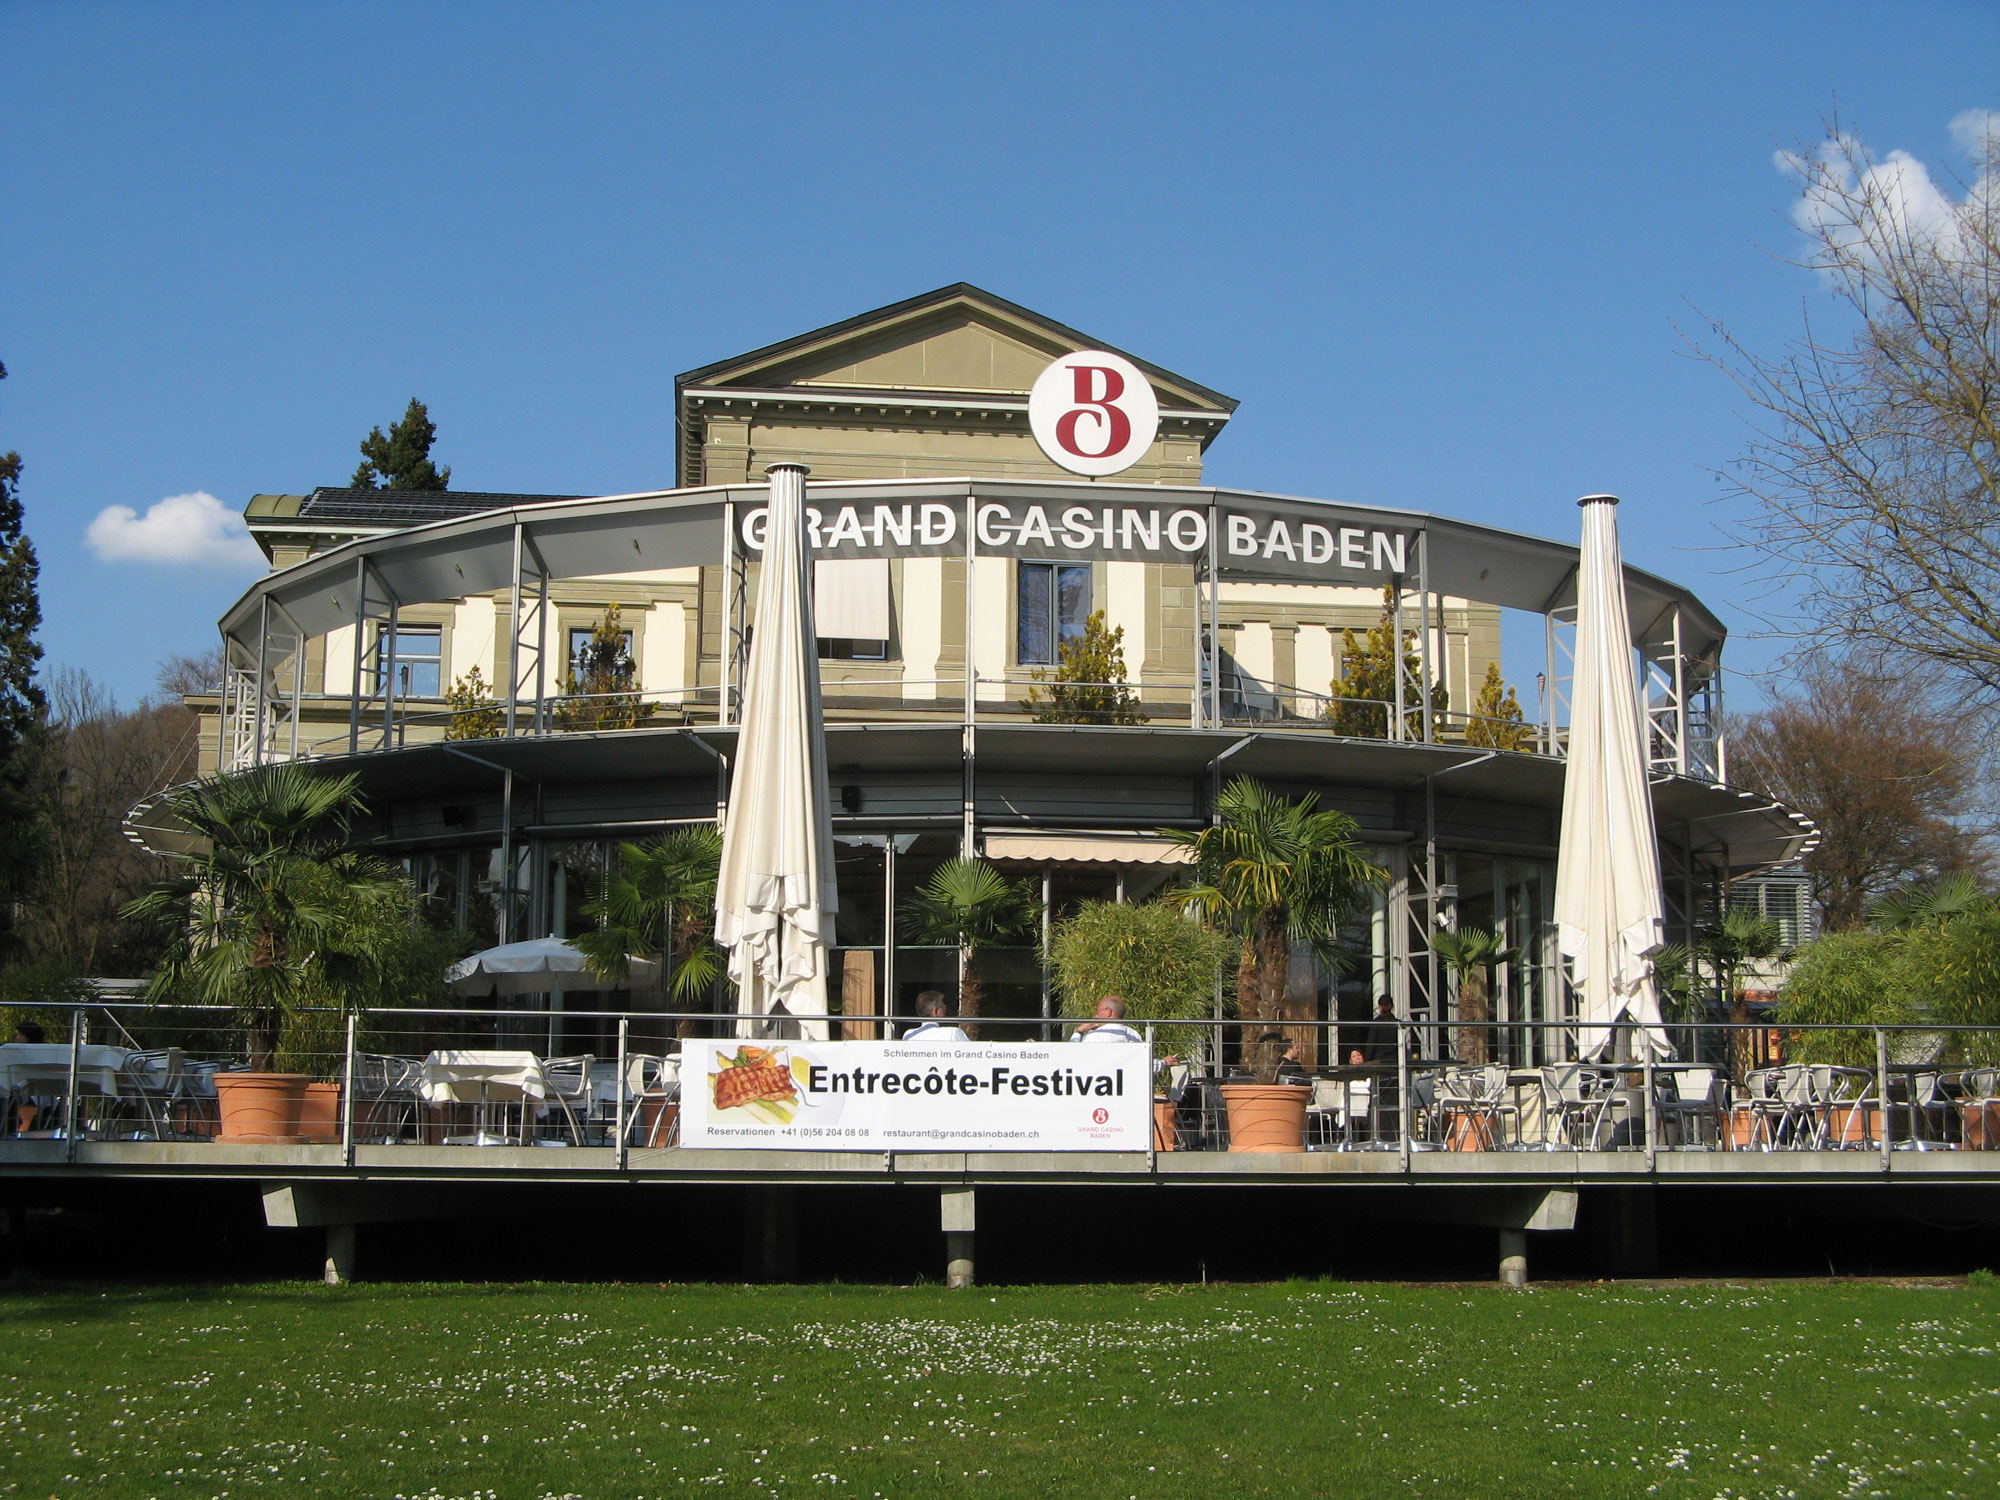 Grande Casino Baden